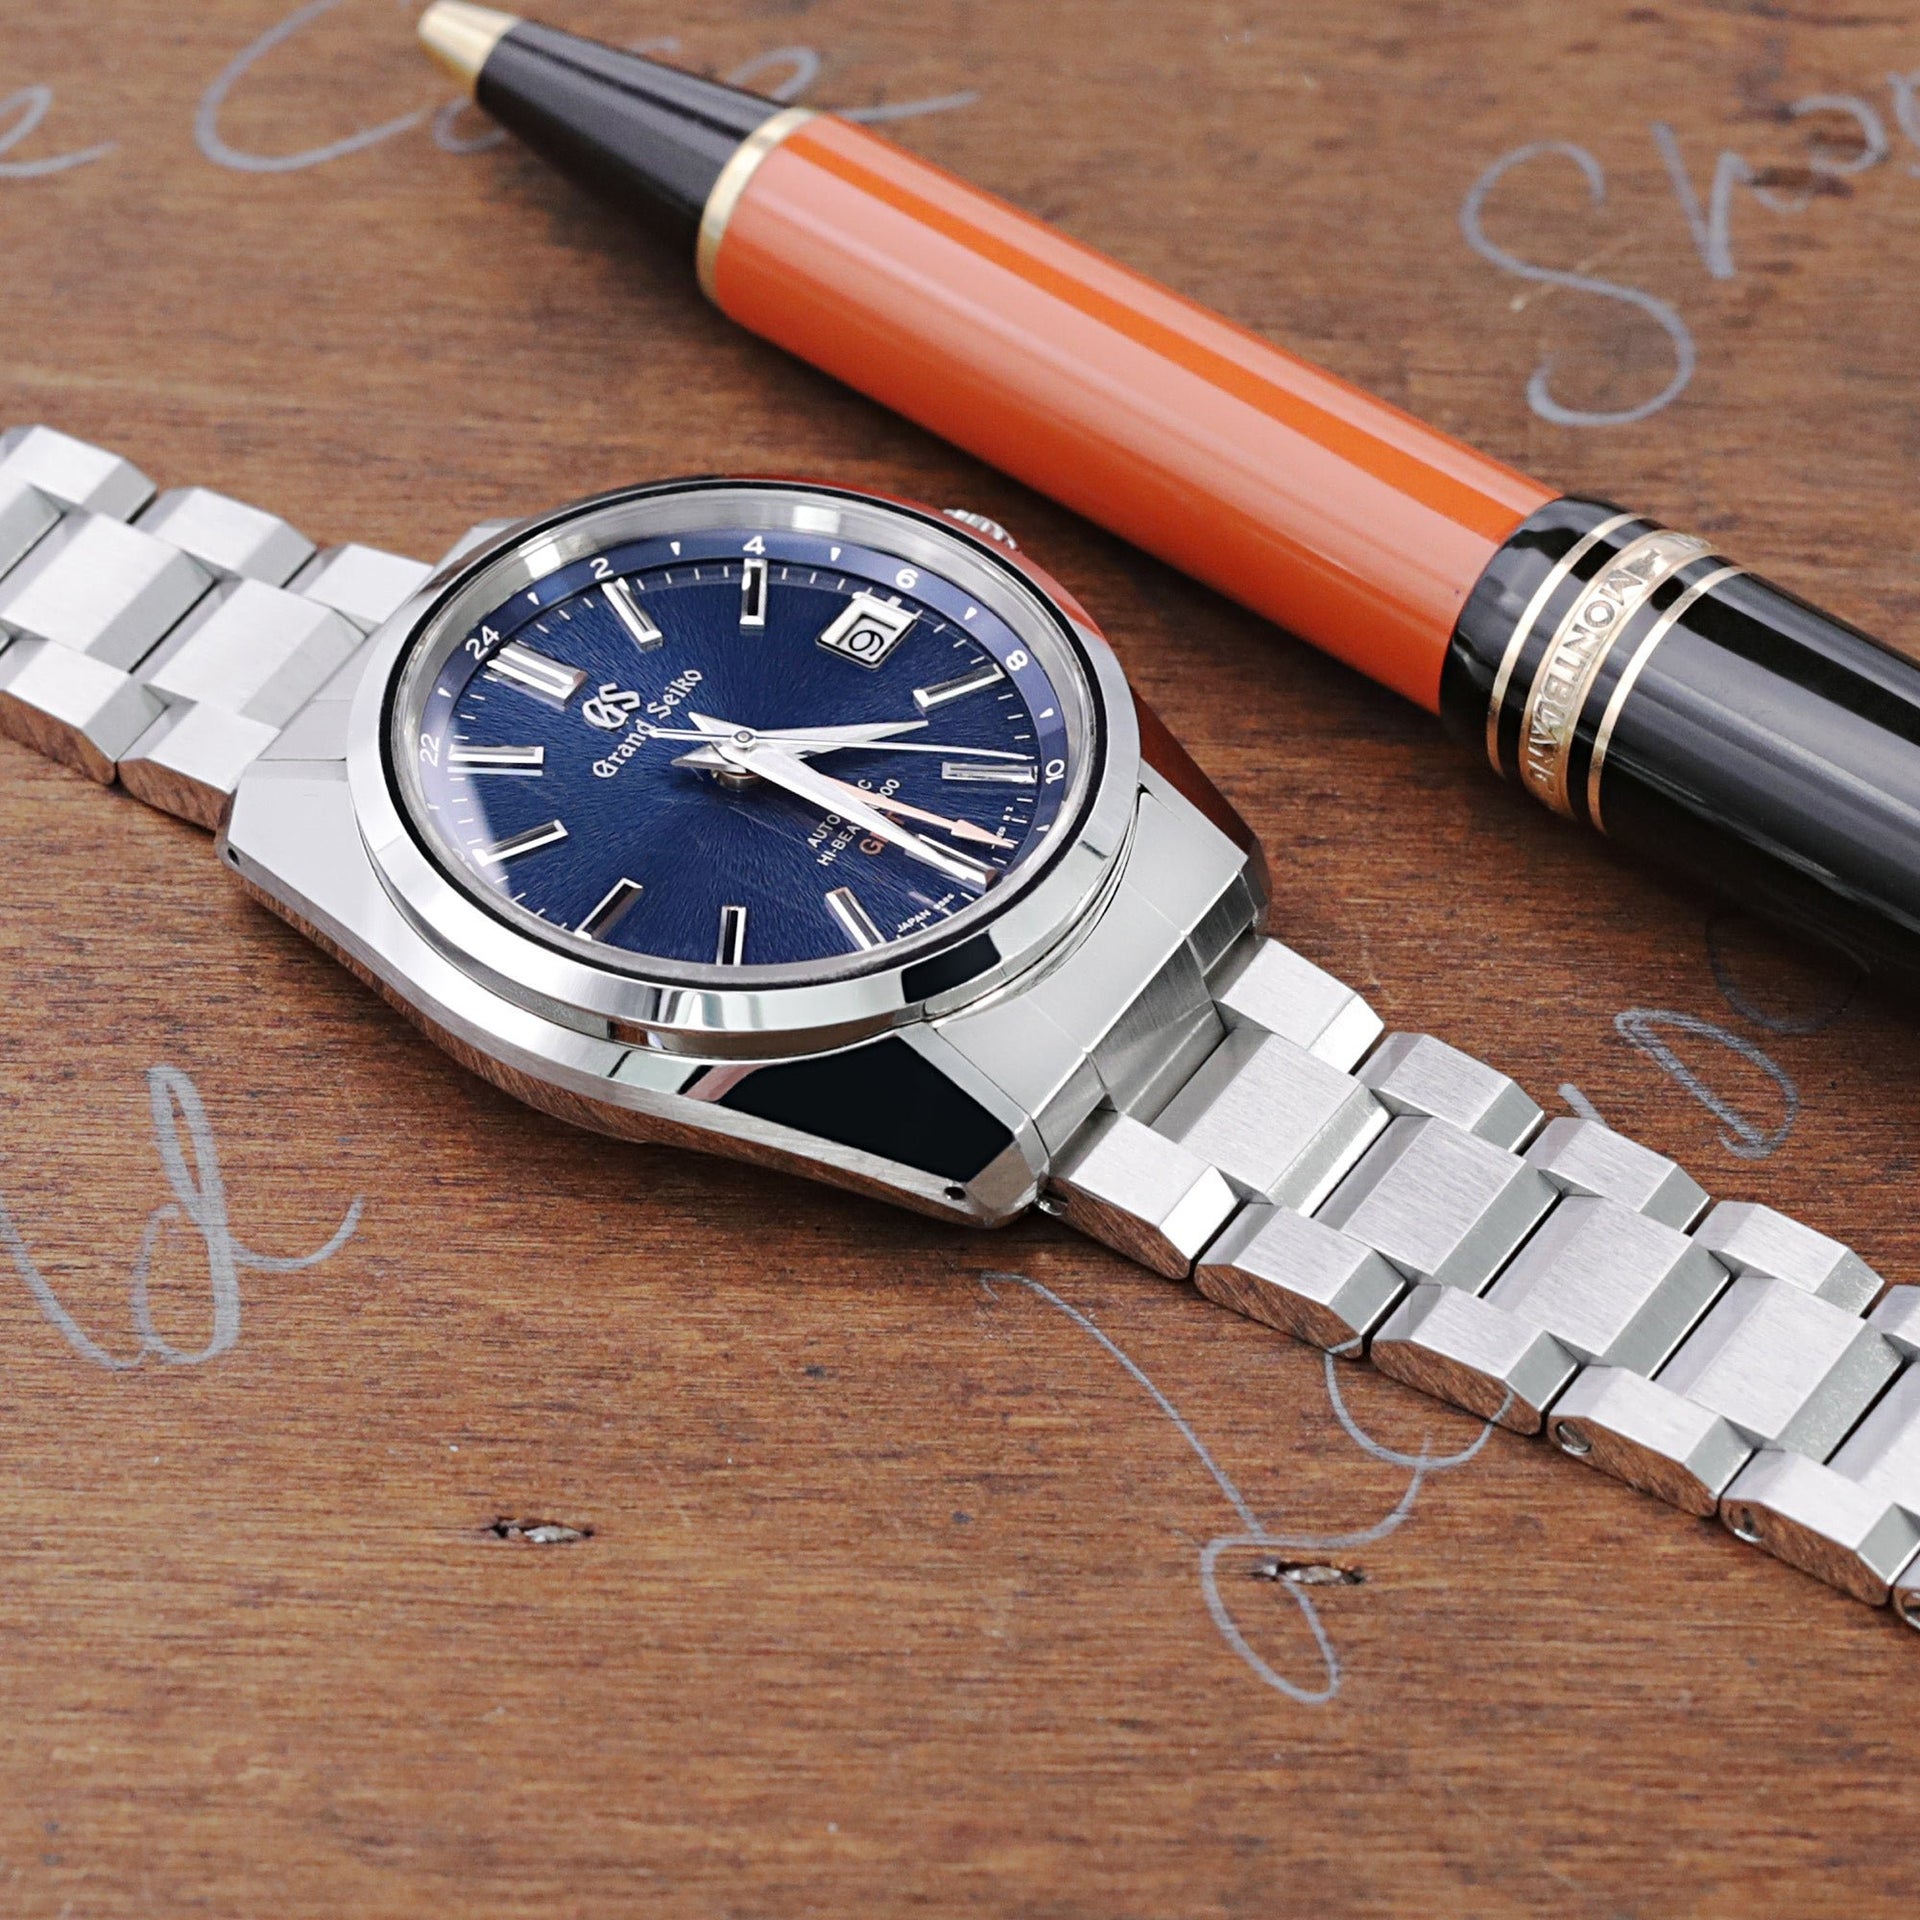 Aftermarket GS bracelet options | WatchUSeek Watch Forums